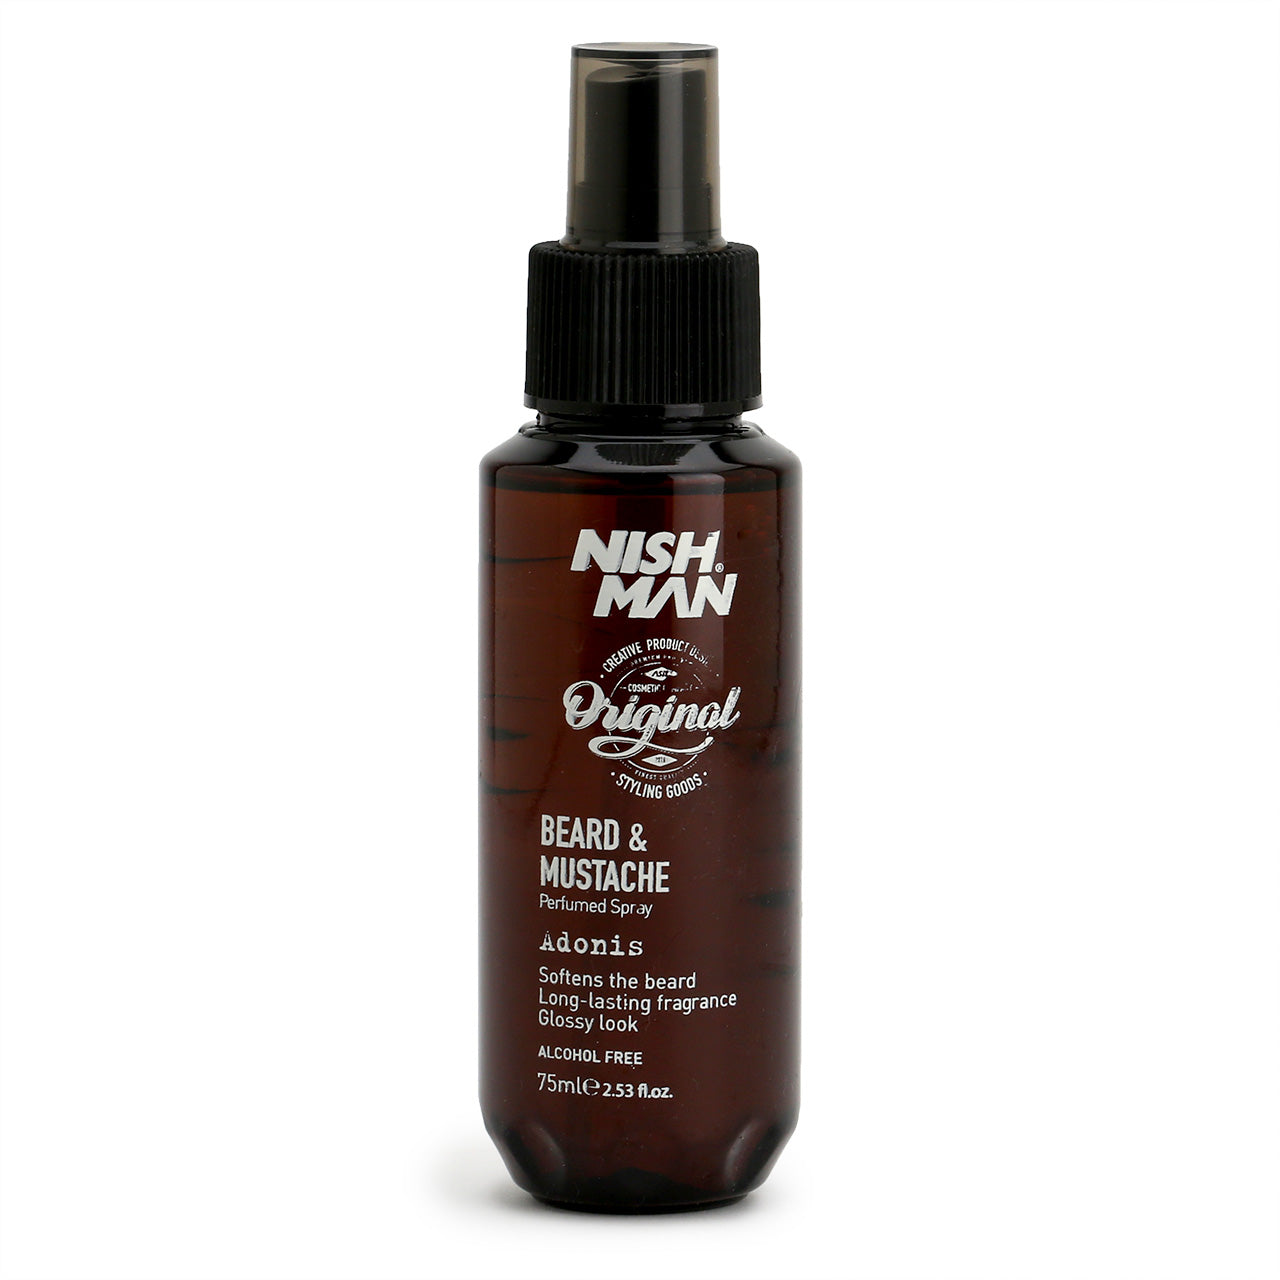 Adonis-scent beard Perfume by Nishman, spray bottle and black carton